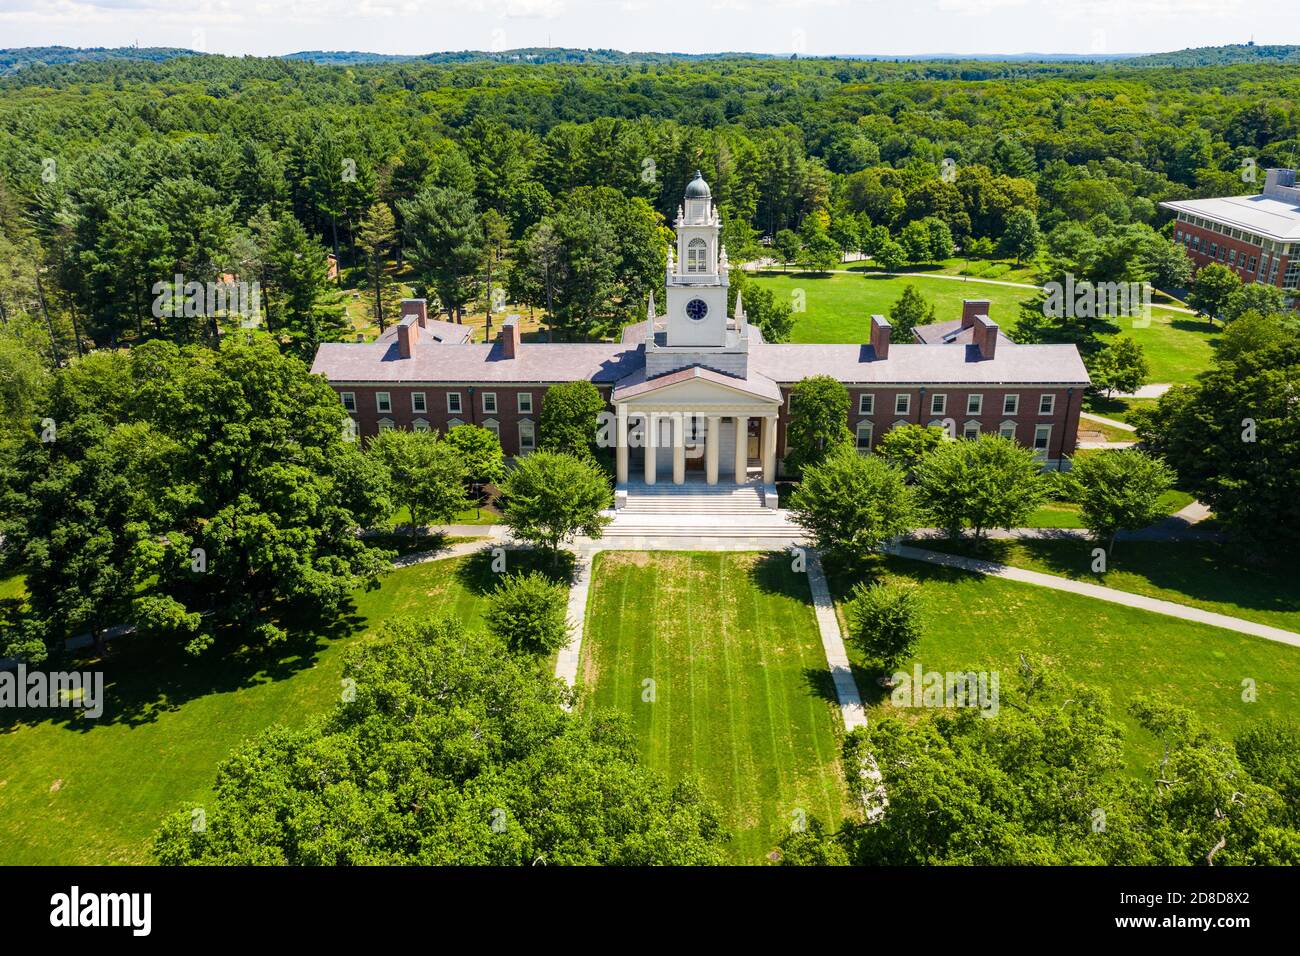 Samuel Phillips Hall, Phillips Academy — Andover, Andover, Massachusetts, USA Stock Photo